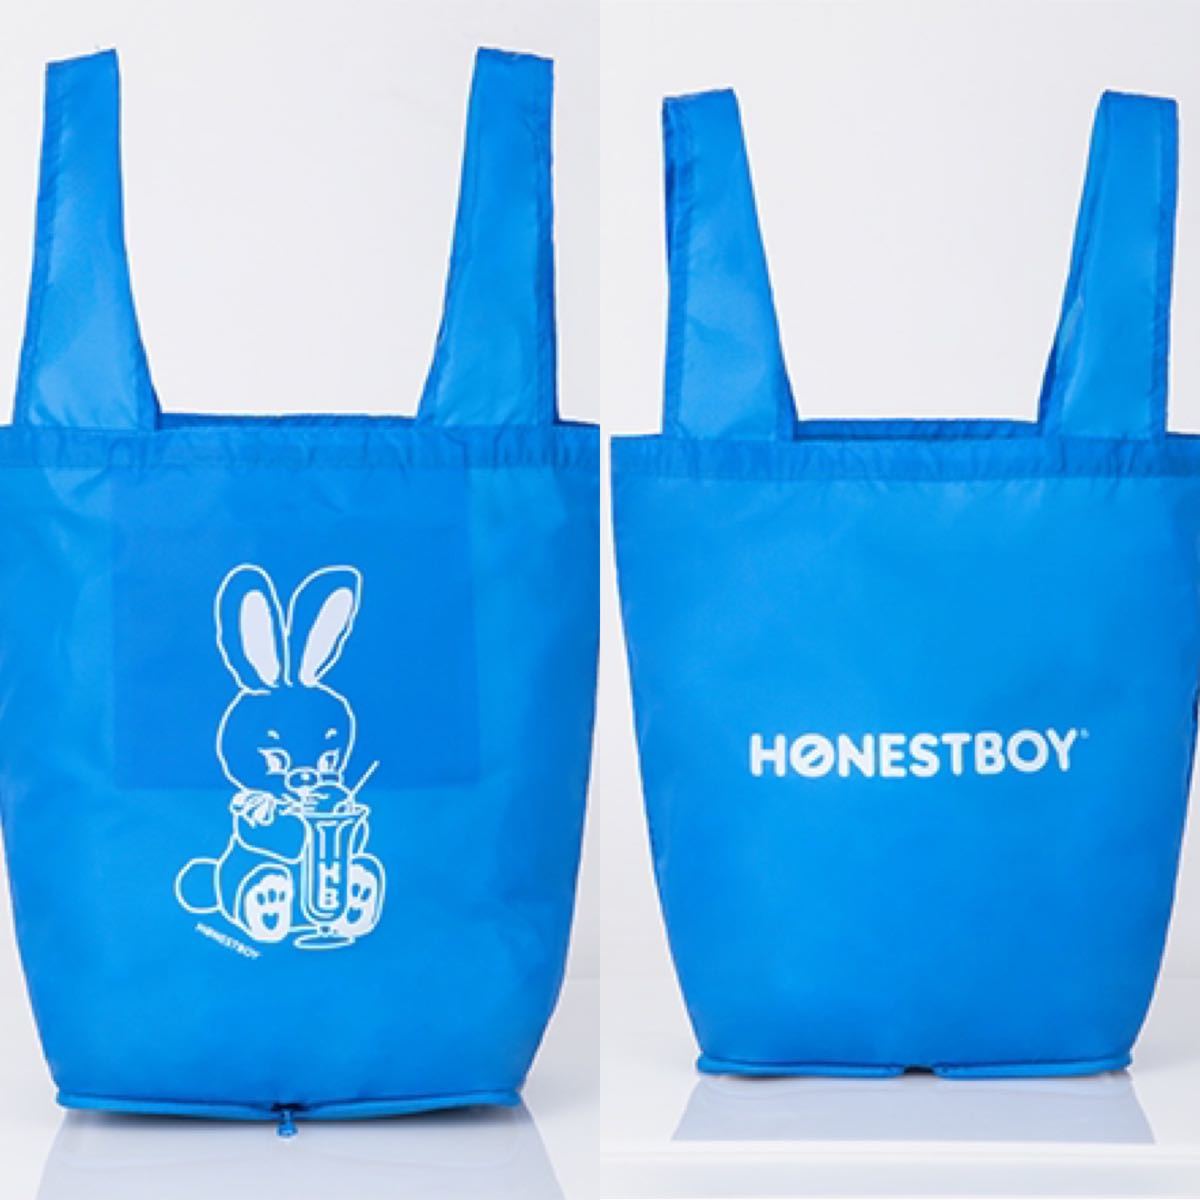 HONESTBOYのショッピングバッグ 2つセット - 生活雑貨